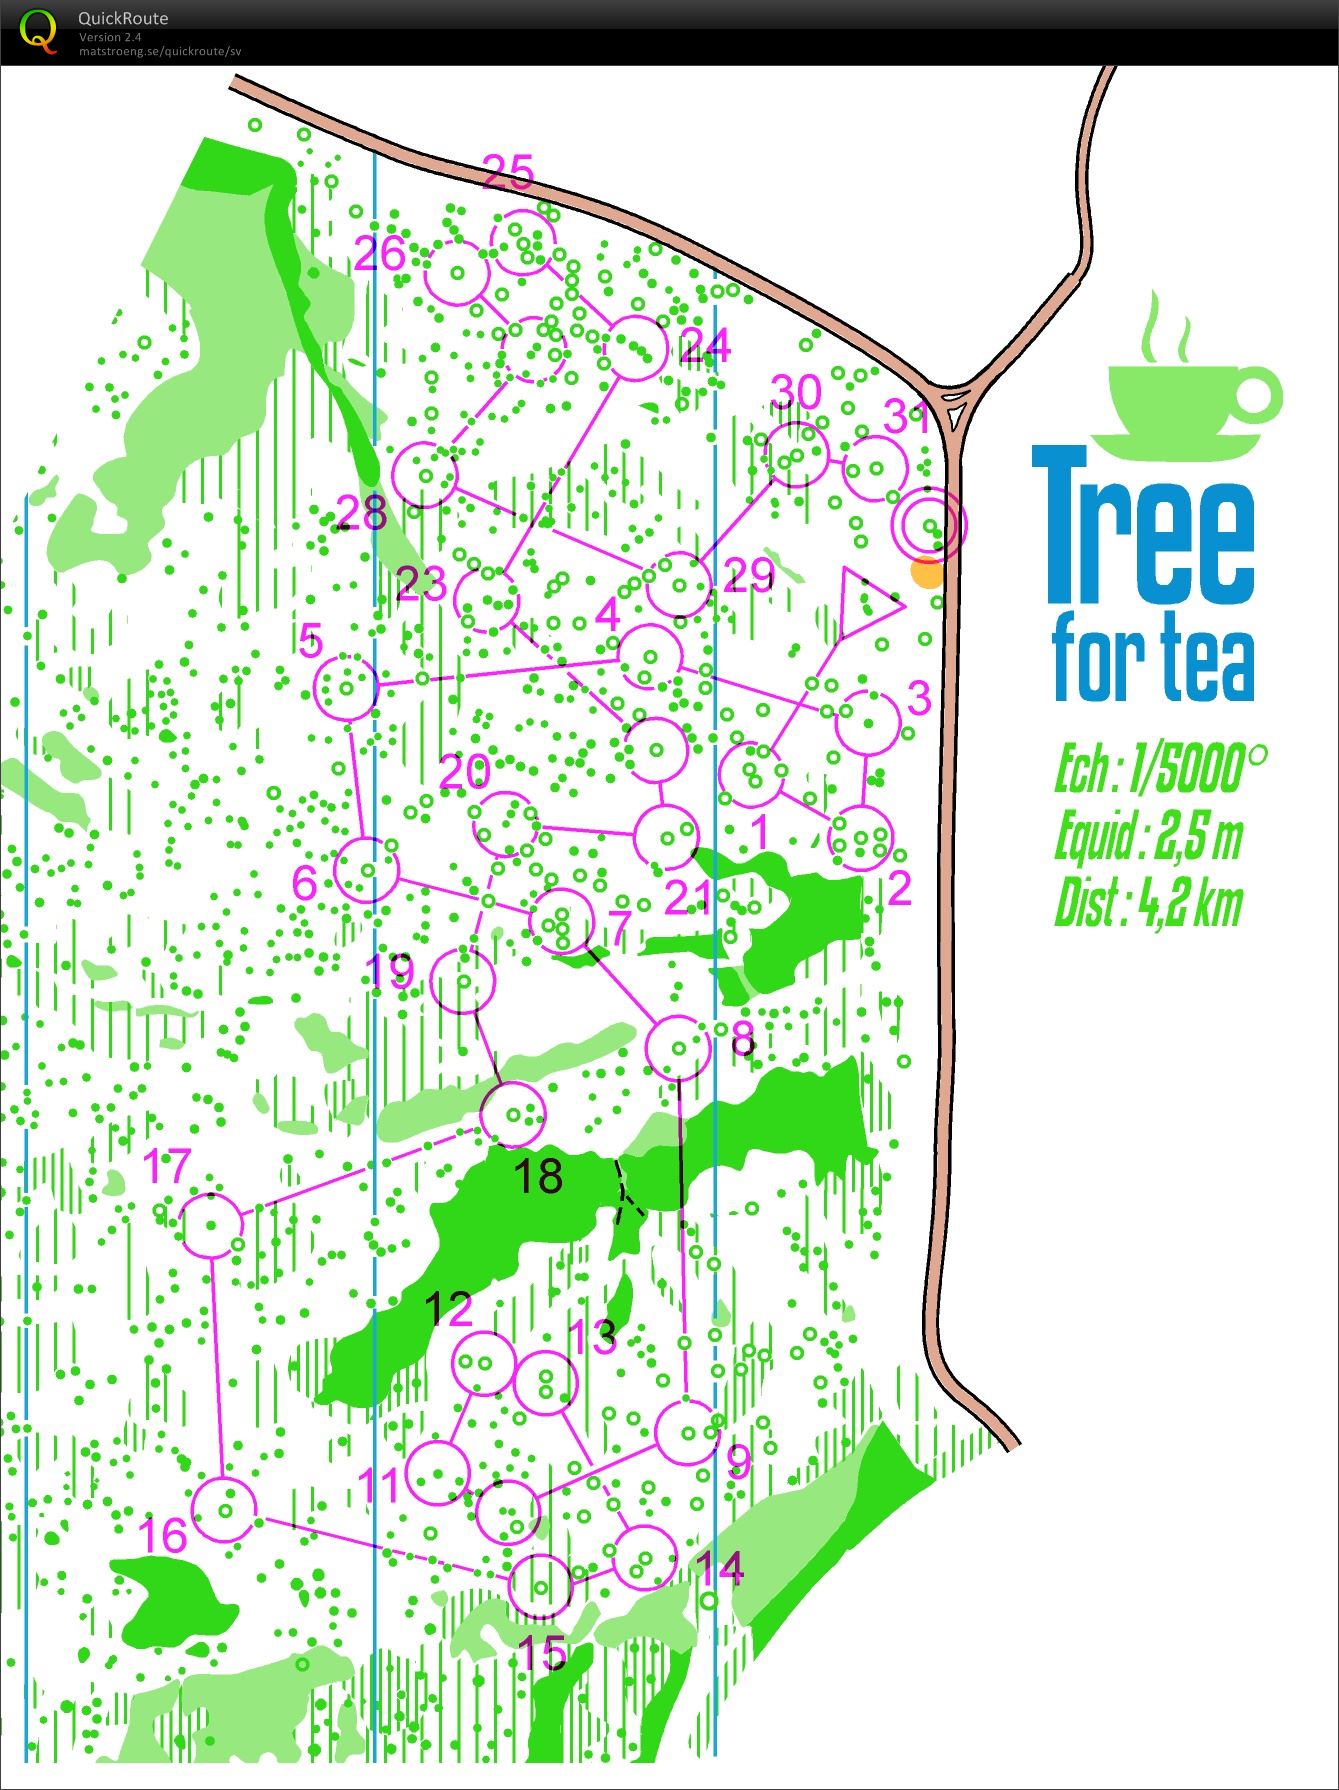 Tree for Tea (21.01.2016)